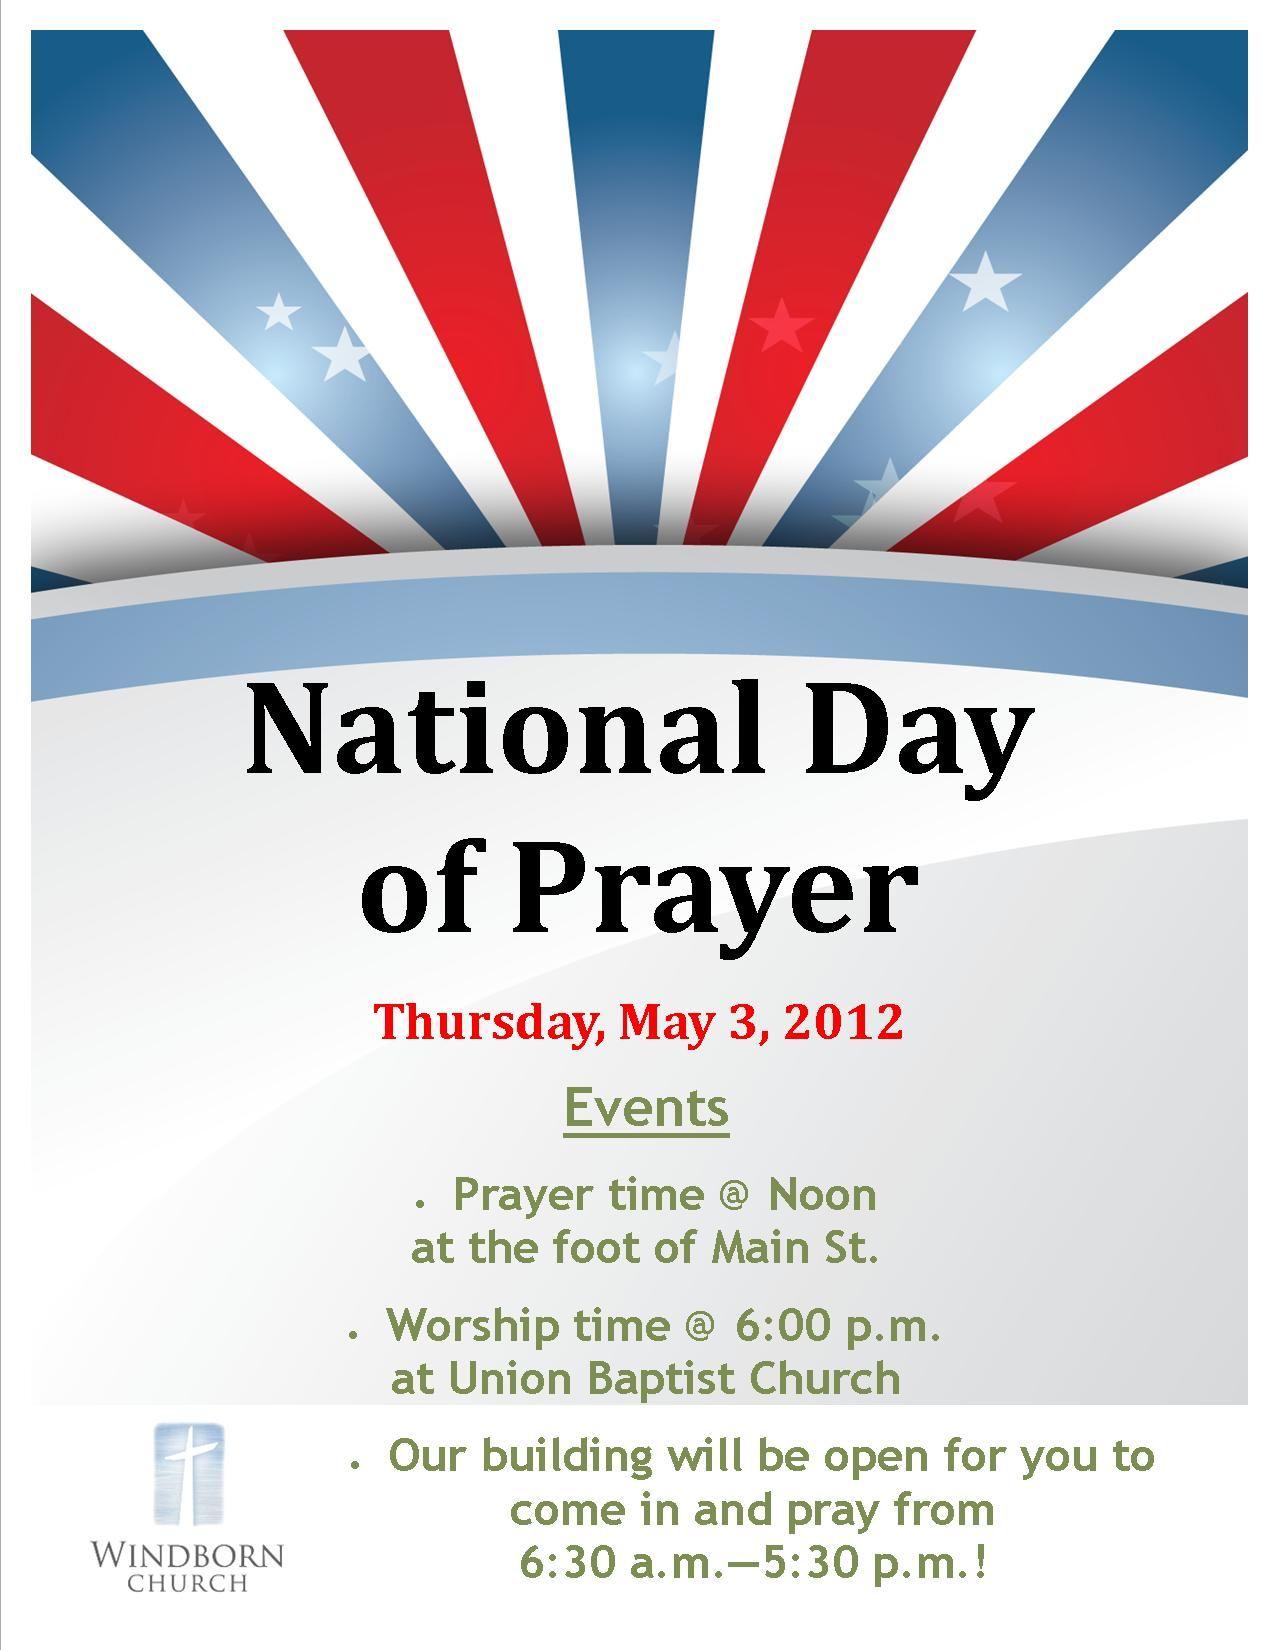 2015 National Day of Prayer Logo - National Day of Prayer | Windborn Church